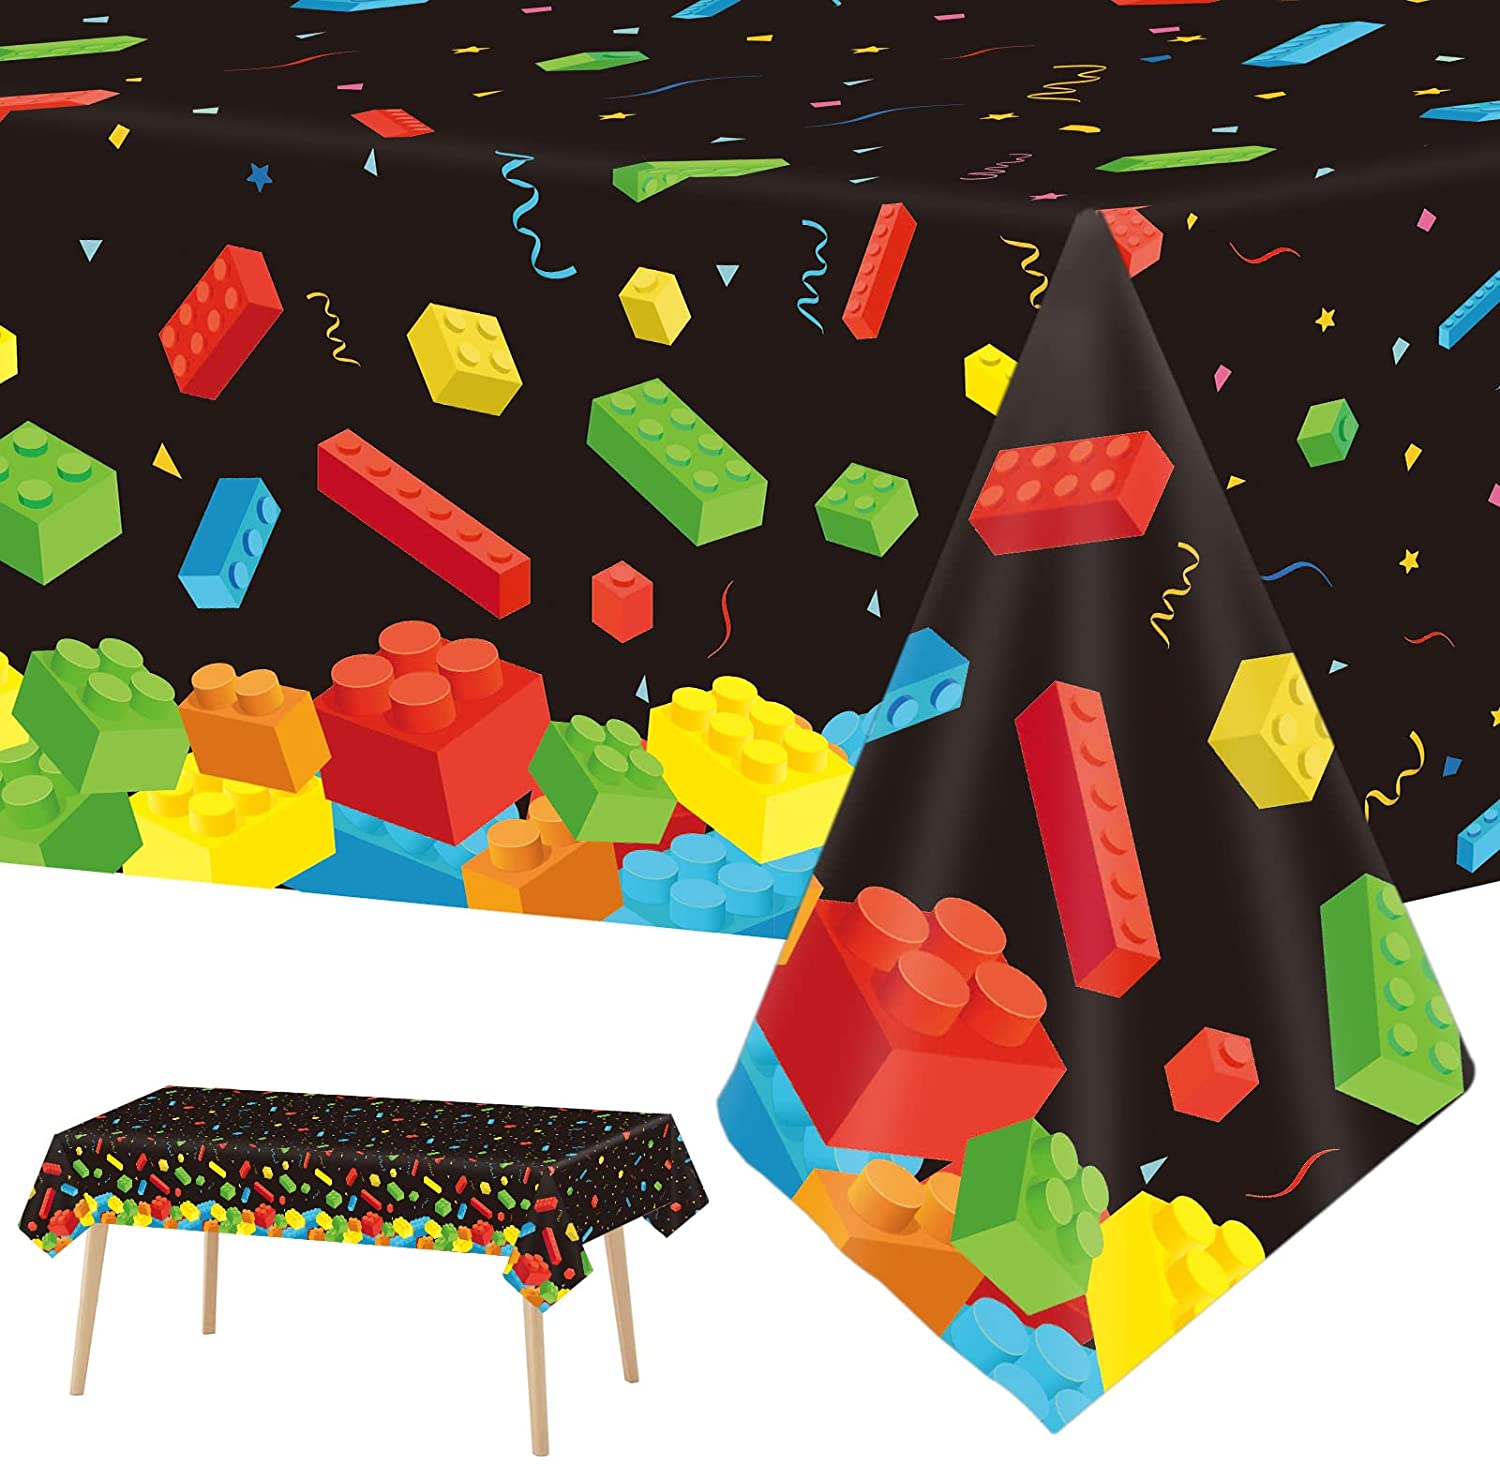 lego-party-ideas-tablecloth